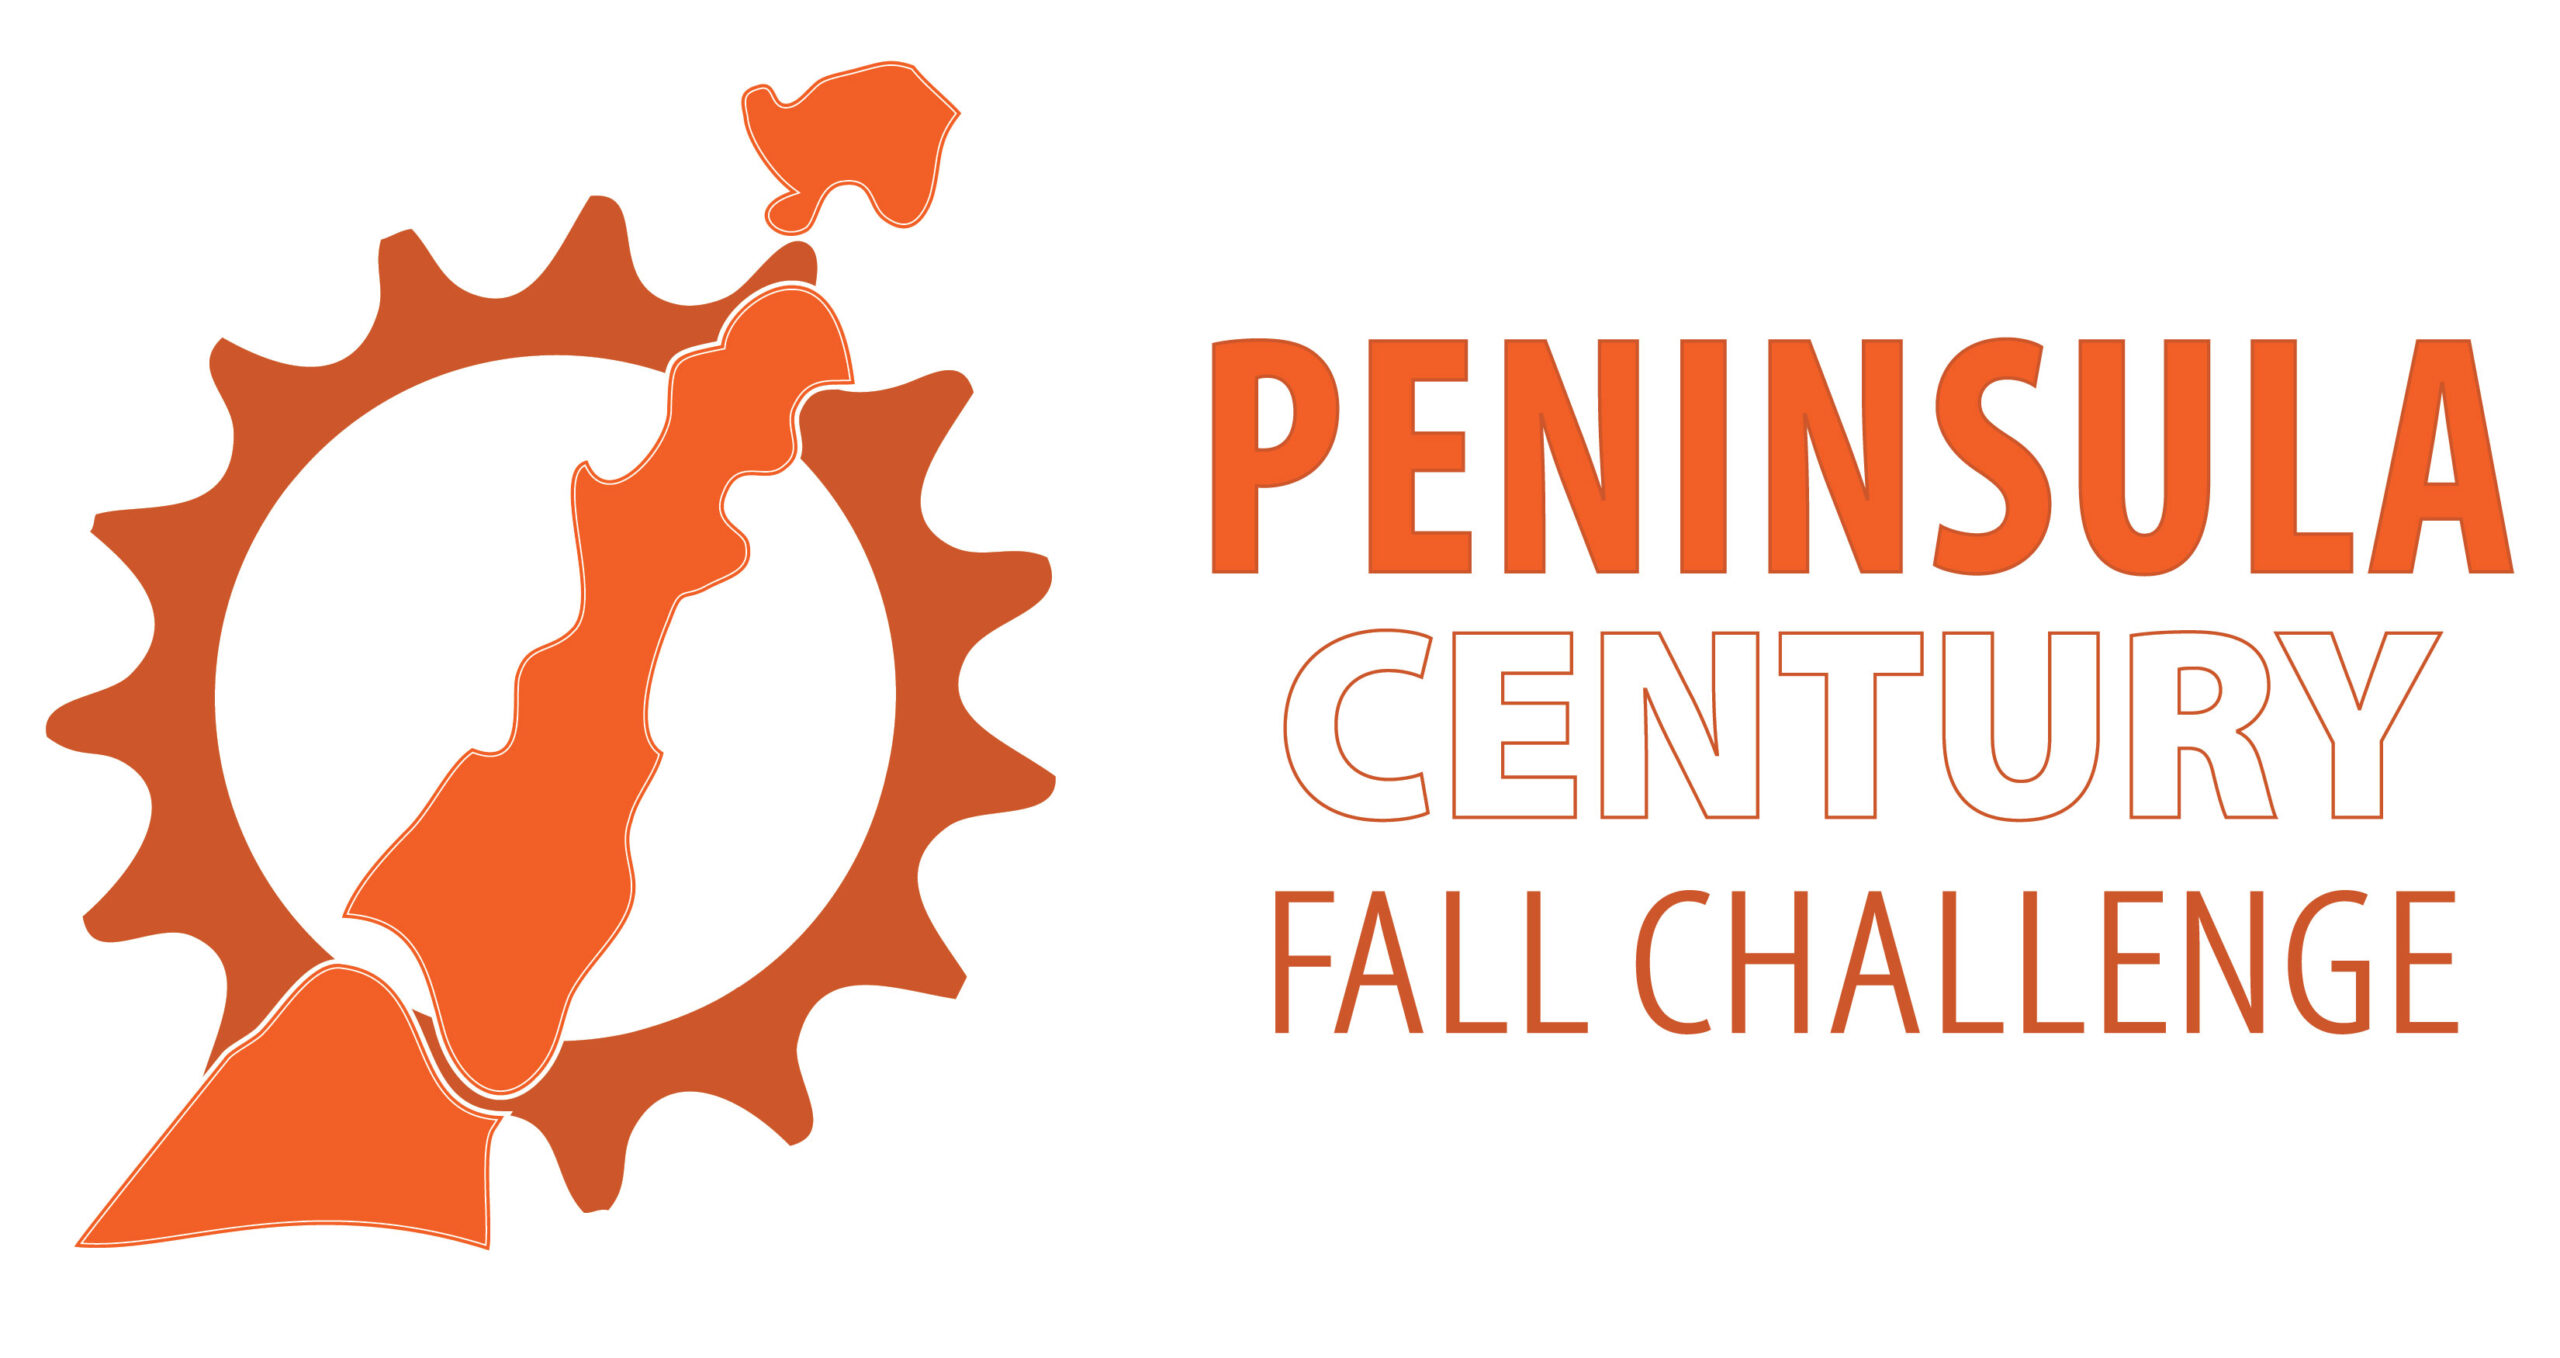 Peninsual Century Fall Challenge bike race